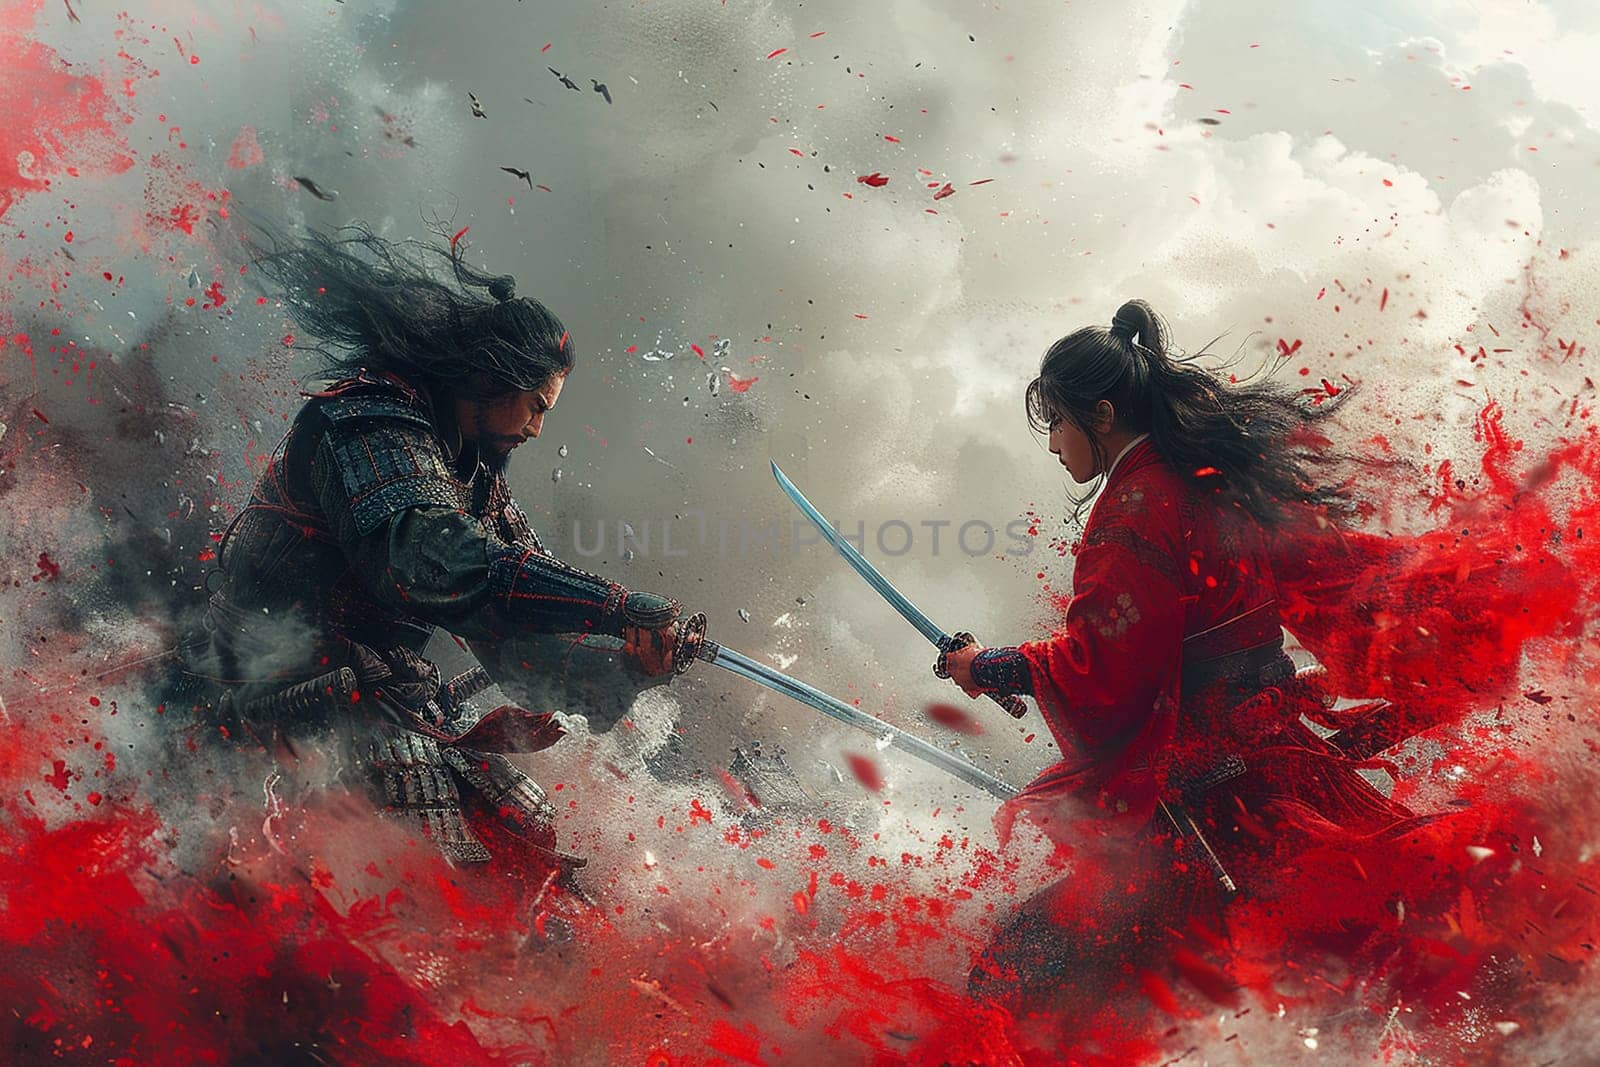 Duel between mythic samurai warriors by Benzoix